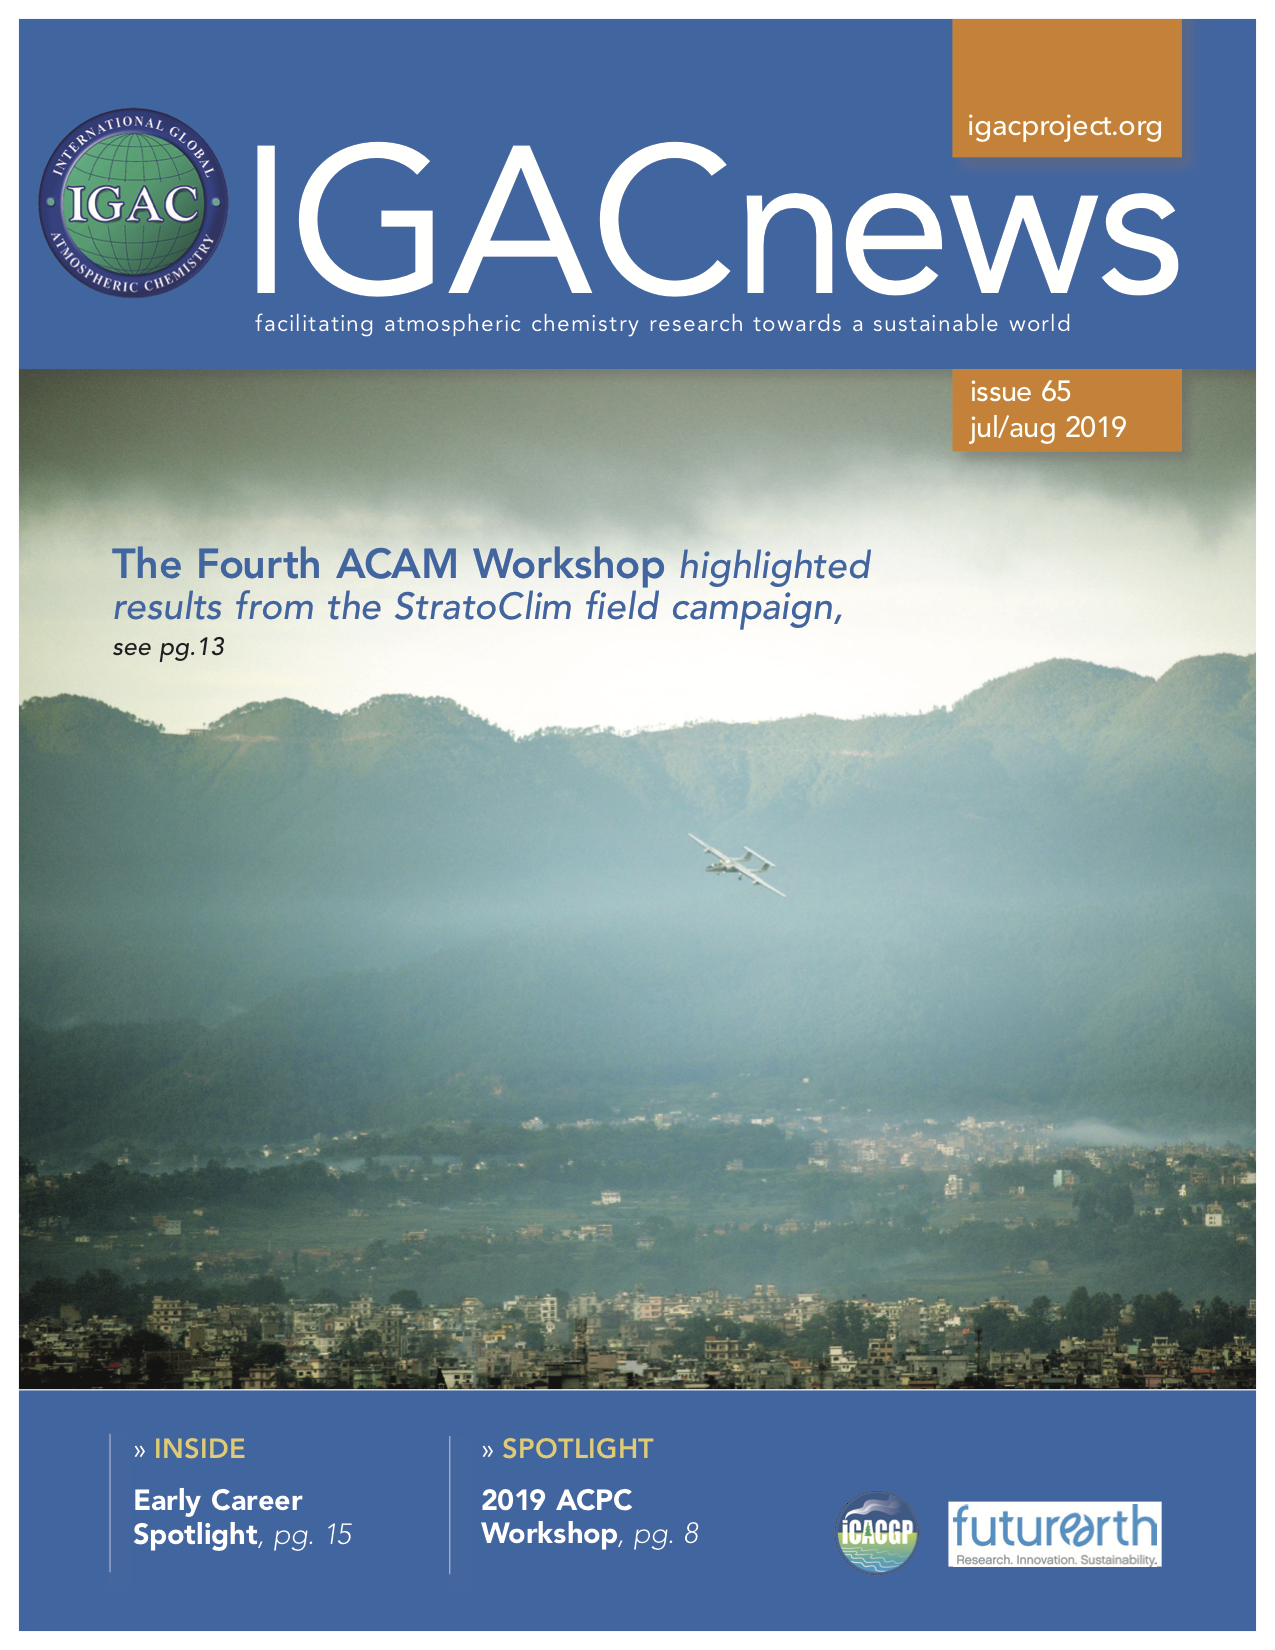 IGACnews Issue 65 Jul/Aug 2019